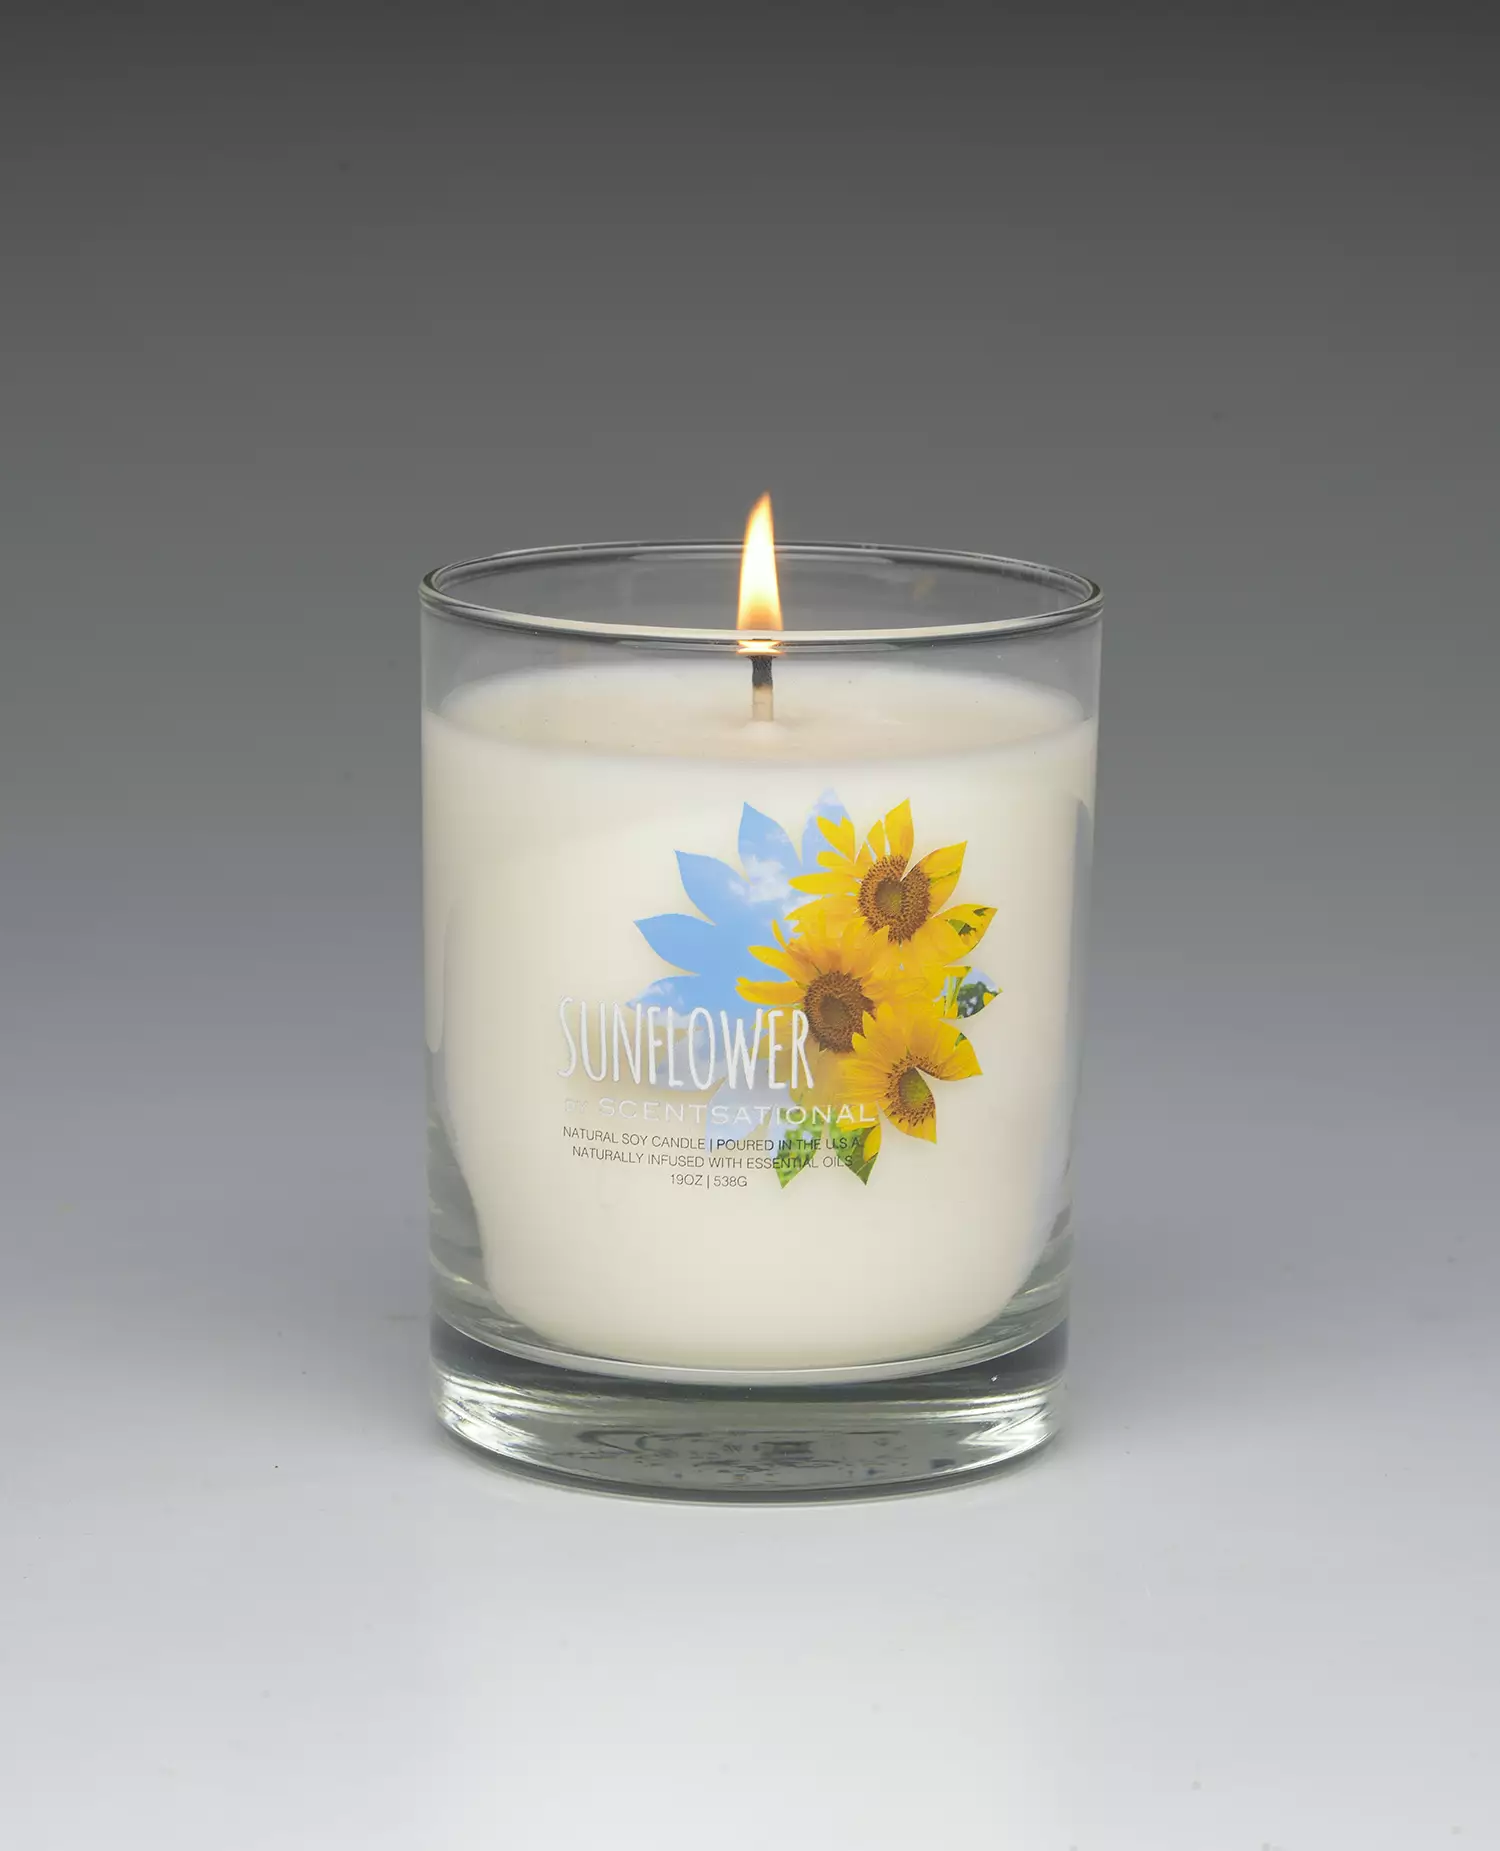 Sunflower – 11oz scented candle burning